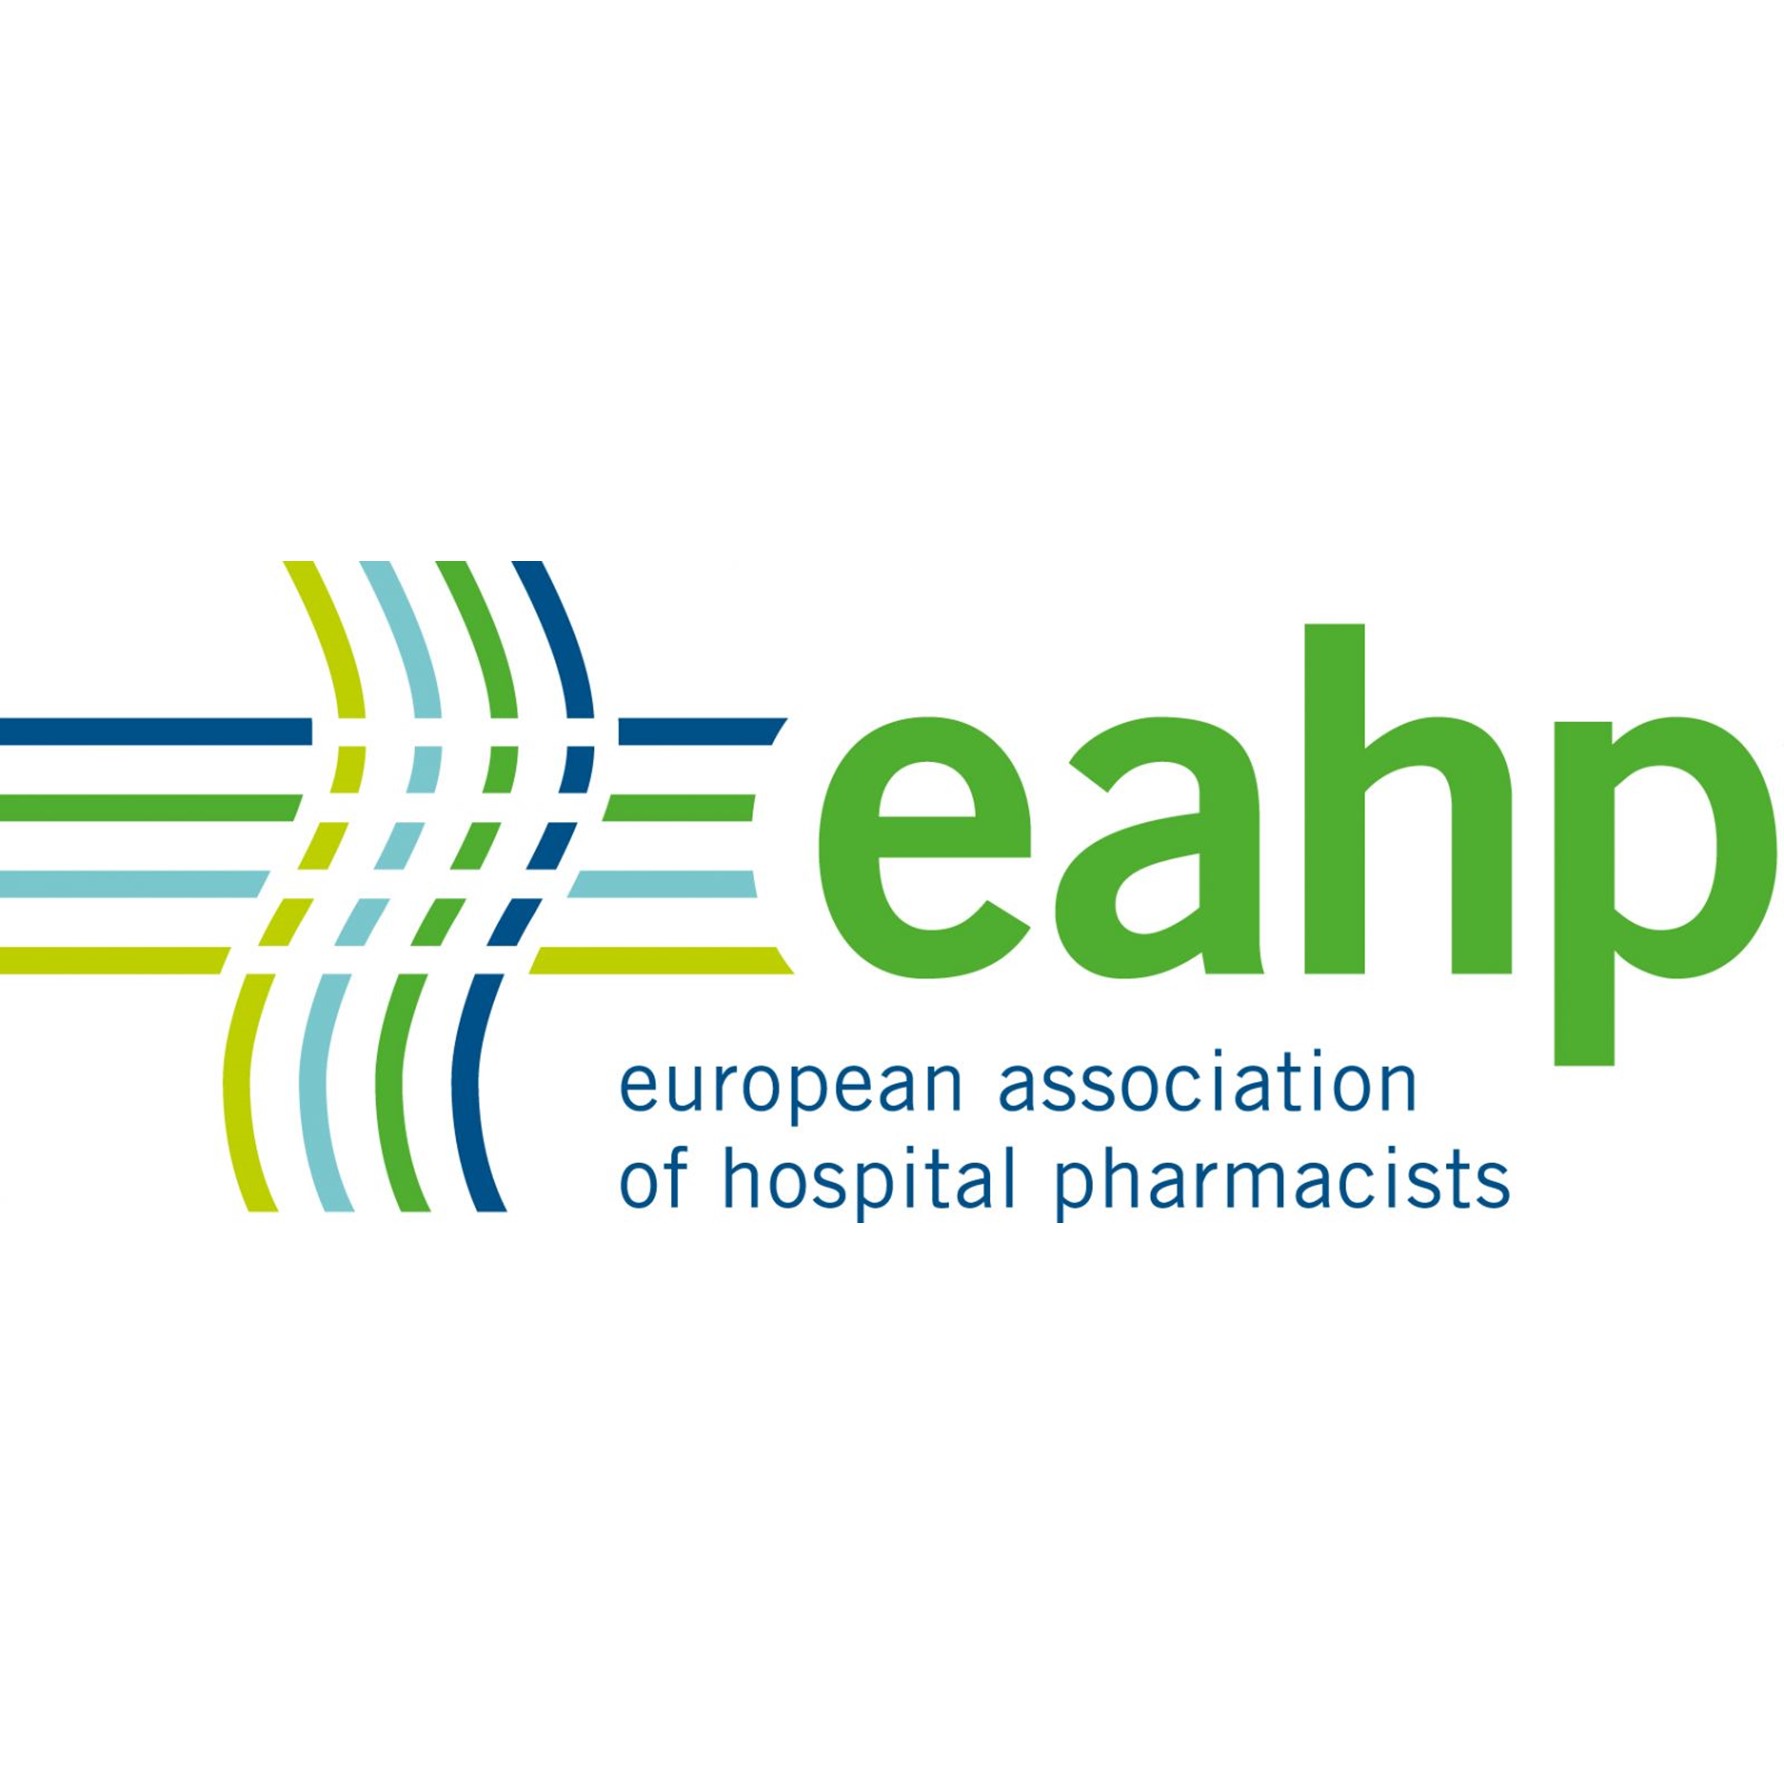 European Association of Hospital Pharmacists (EAHP) image